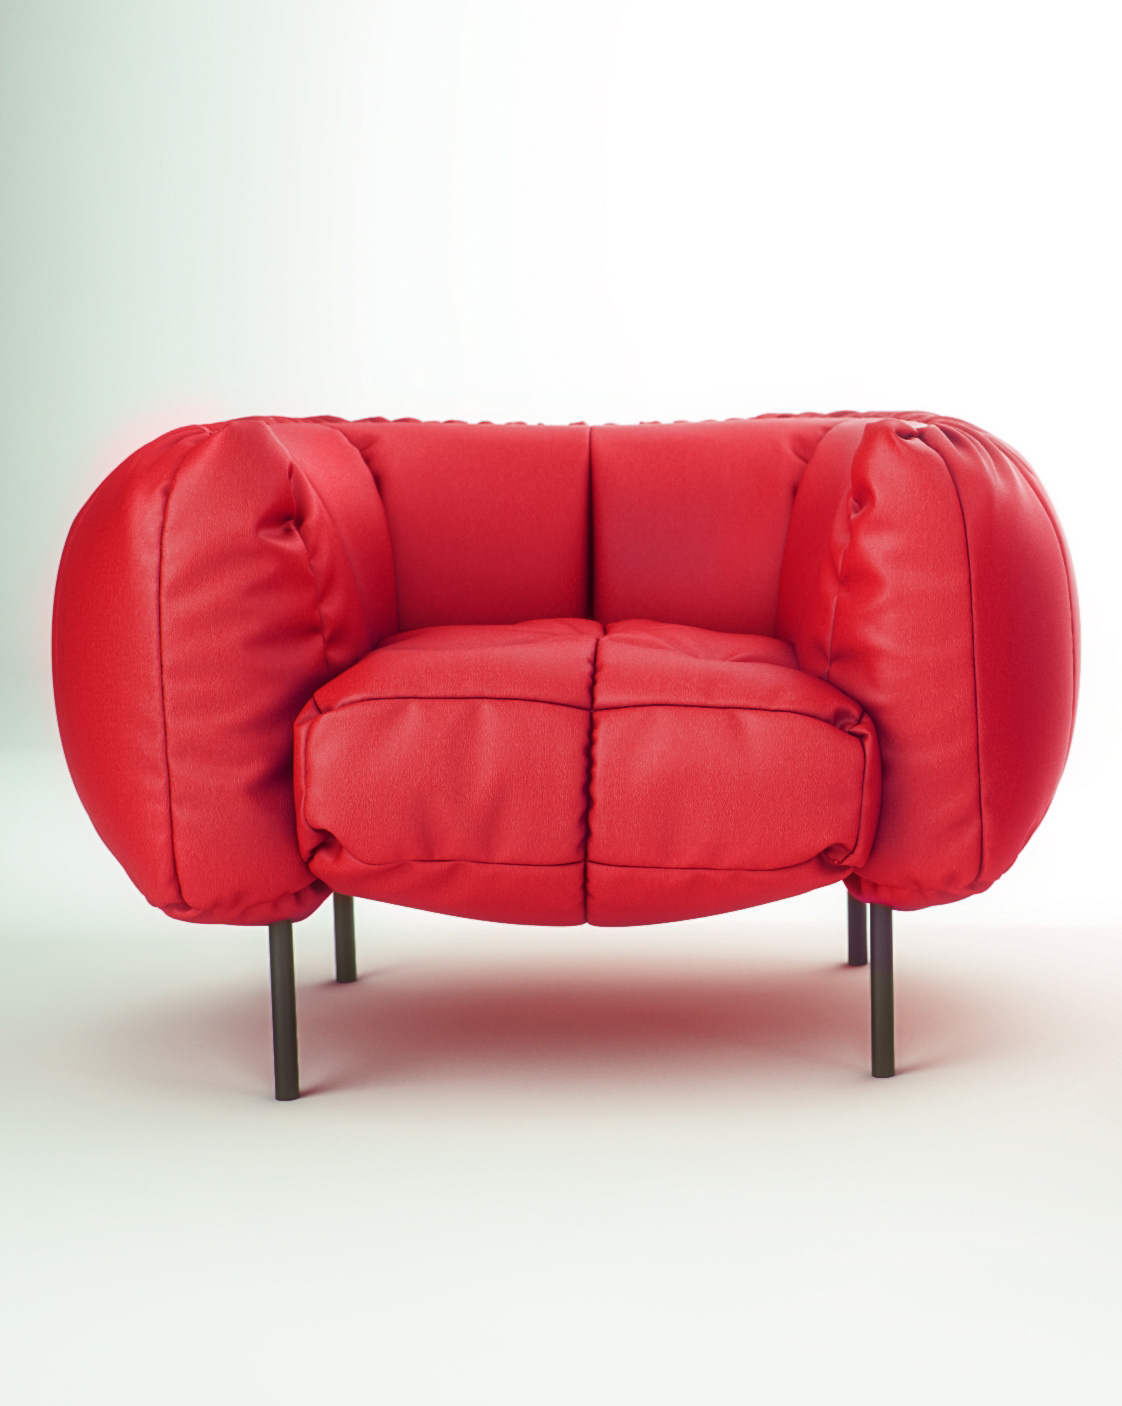 furniture chair design 3D Render CGI